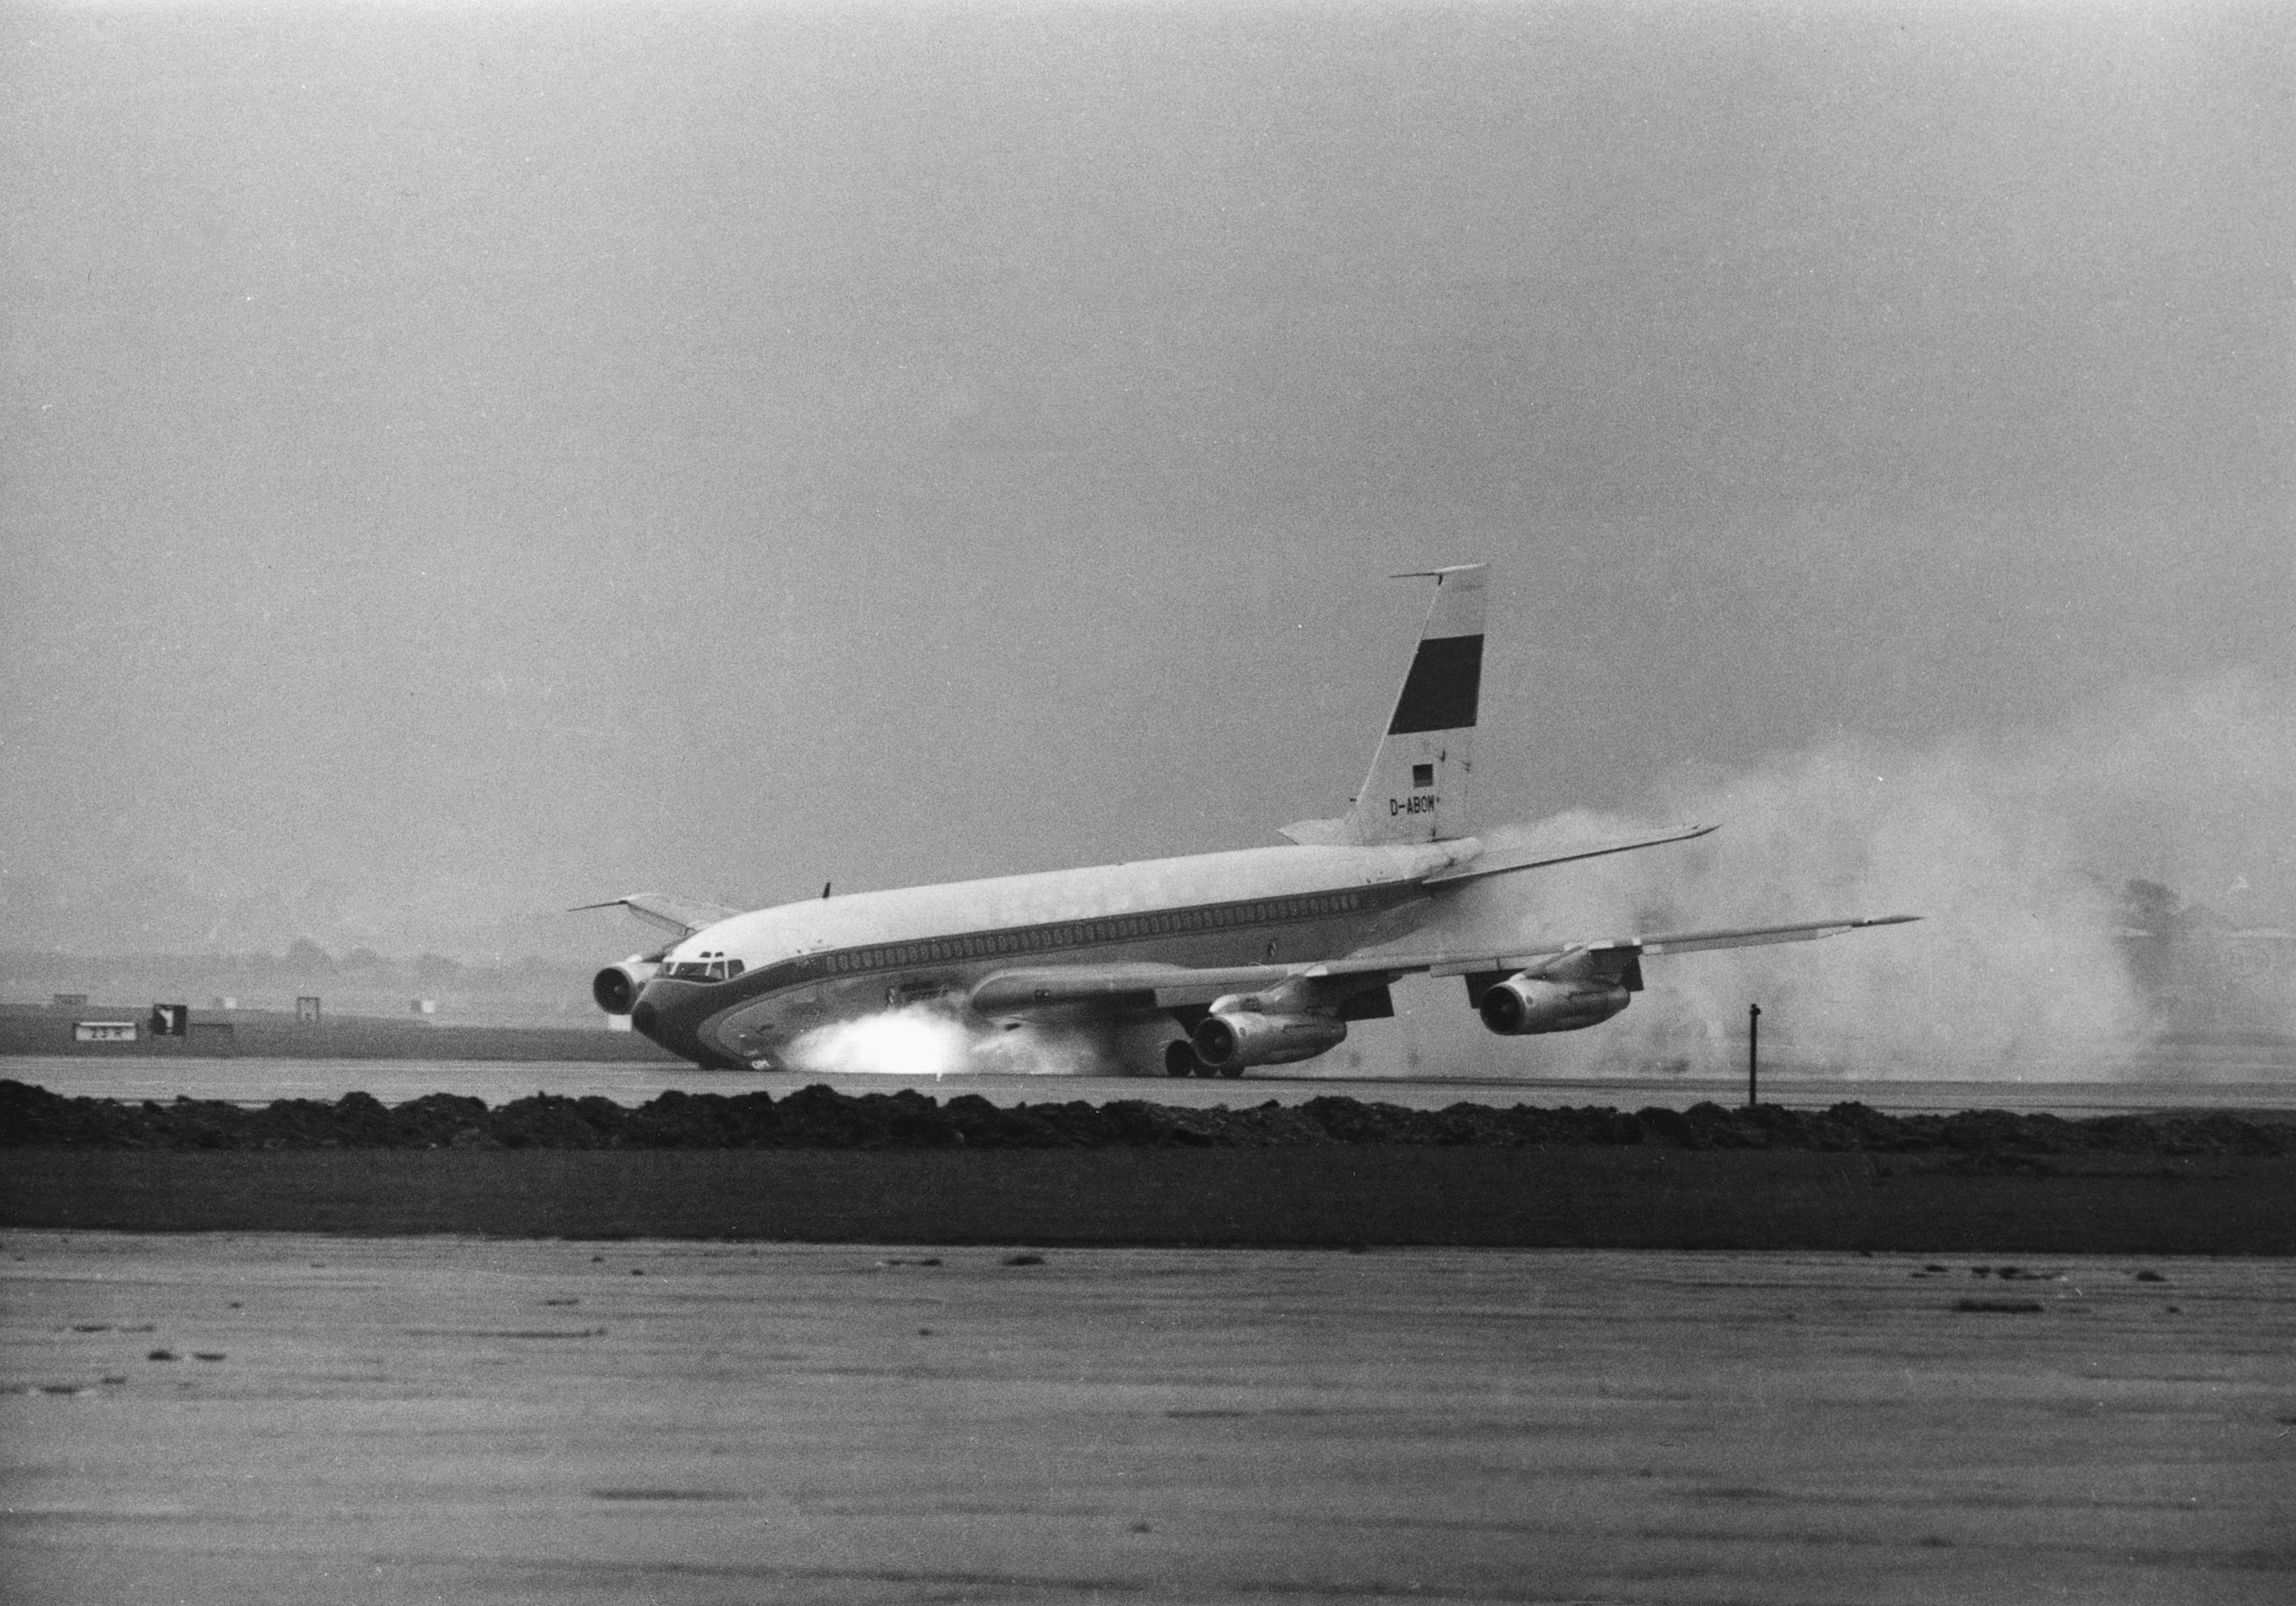 File:Photo of TWA Flight 266 crash site 2.jpg - Wikipedia